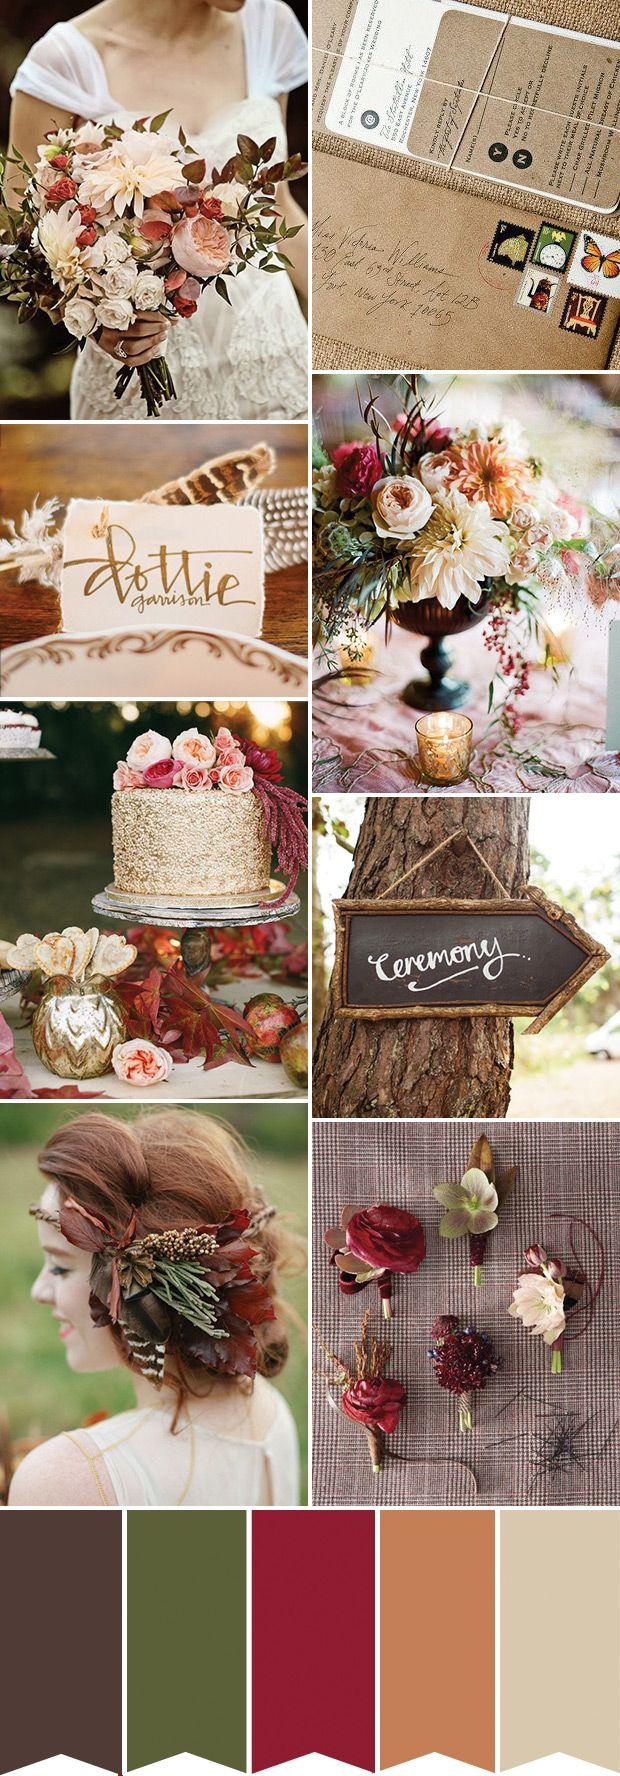 زفاف - Rustic Chic - Autumn Wedding Inspiration